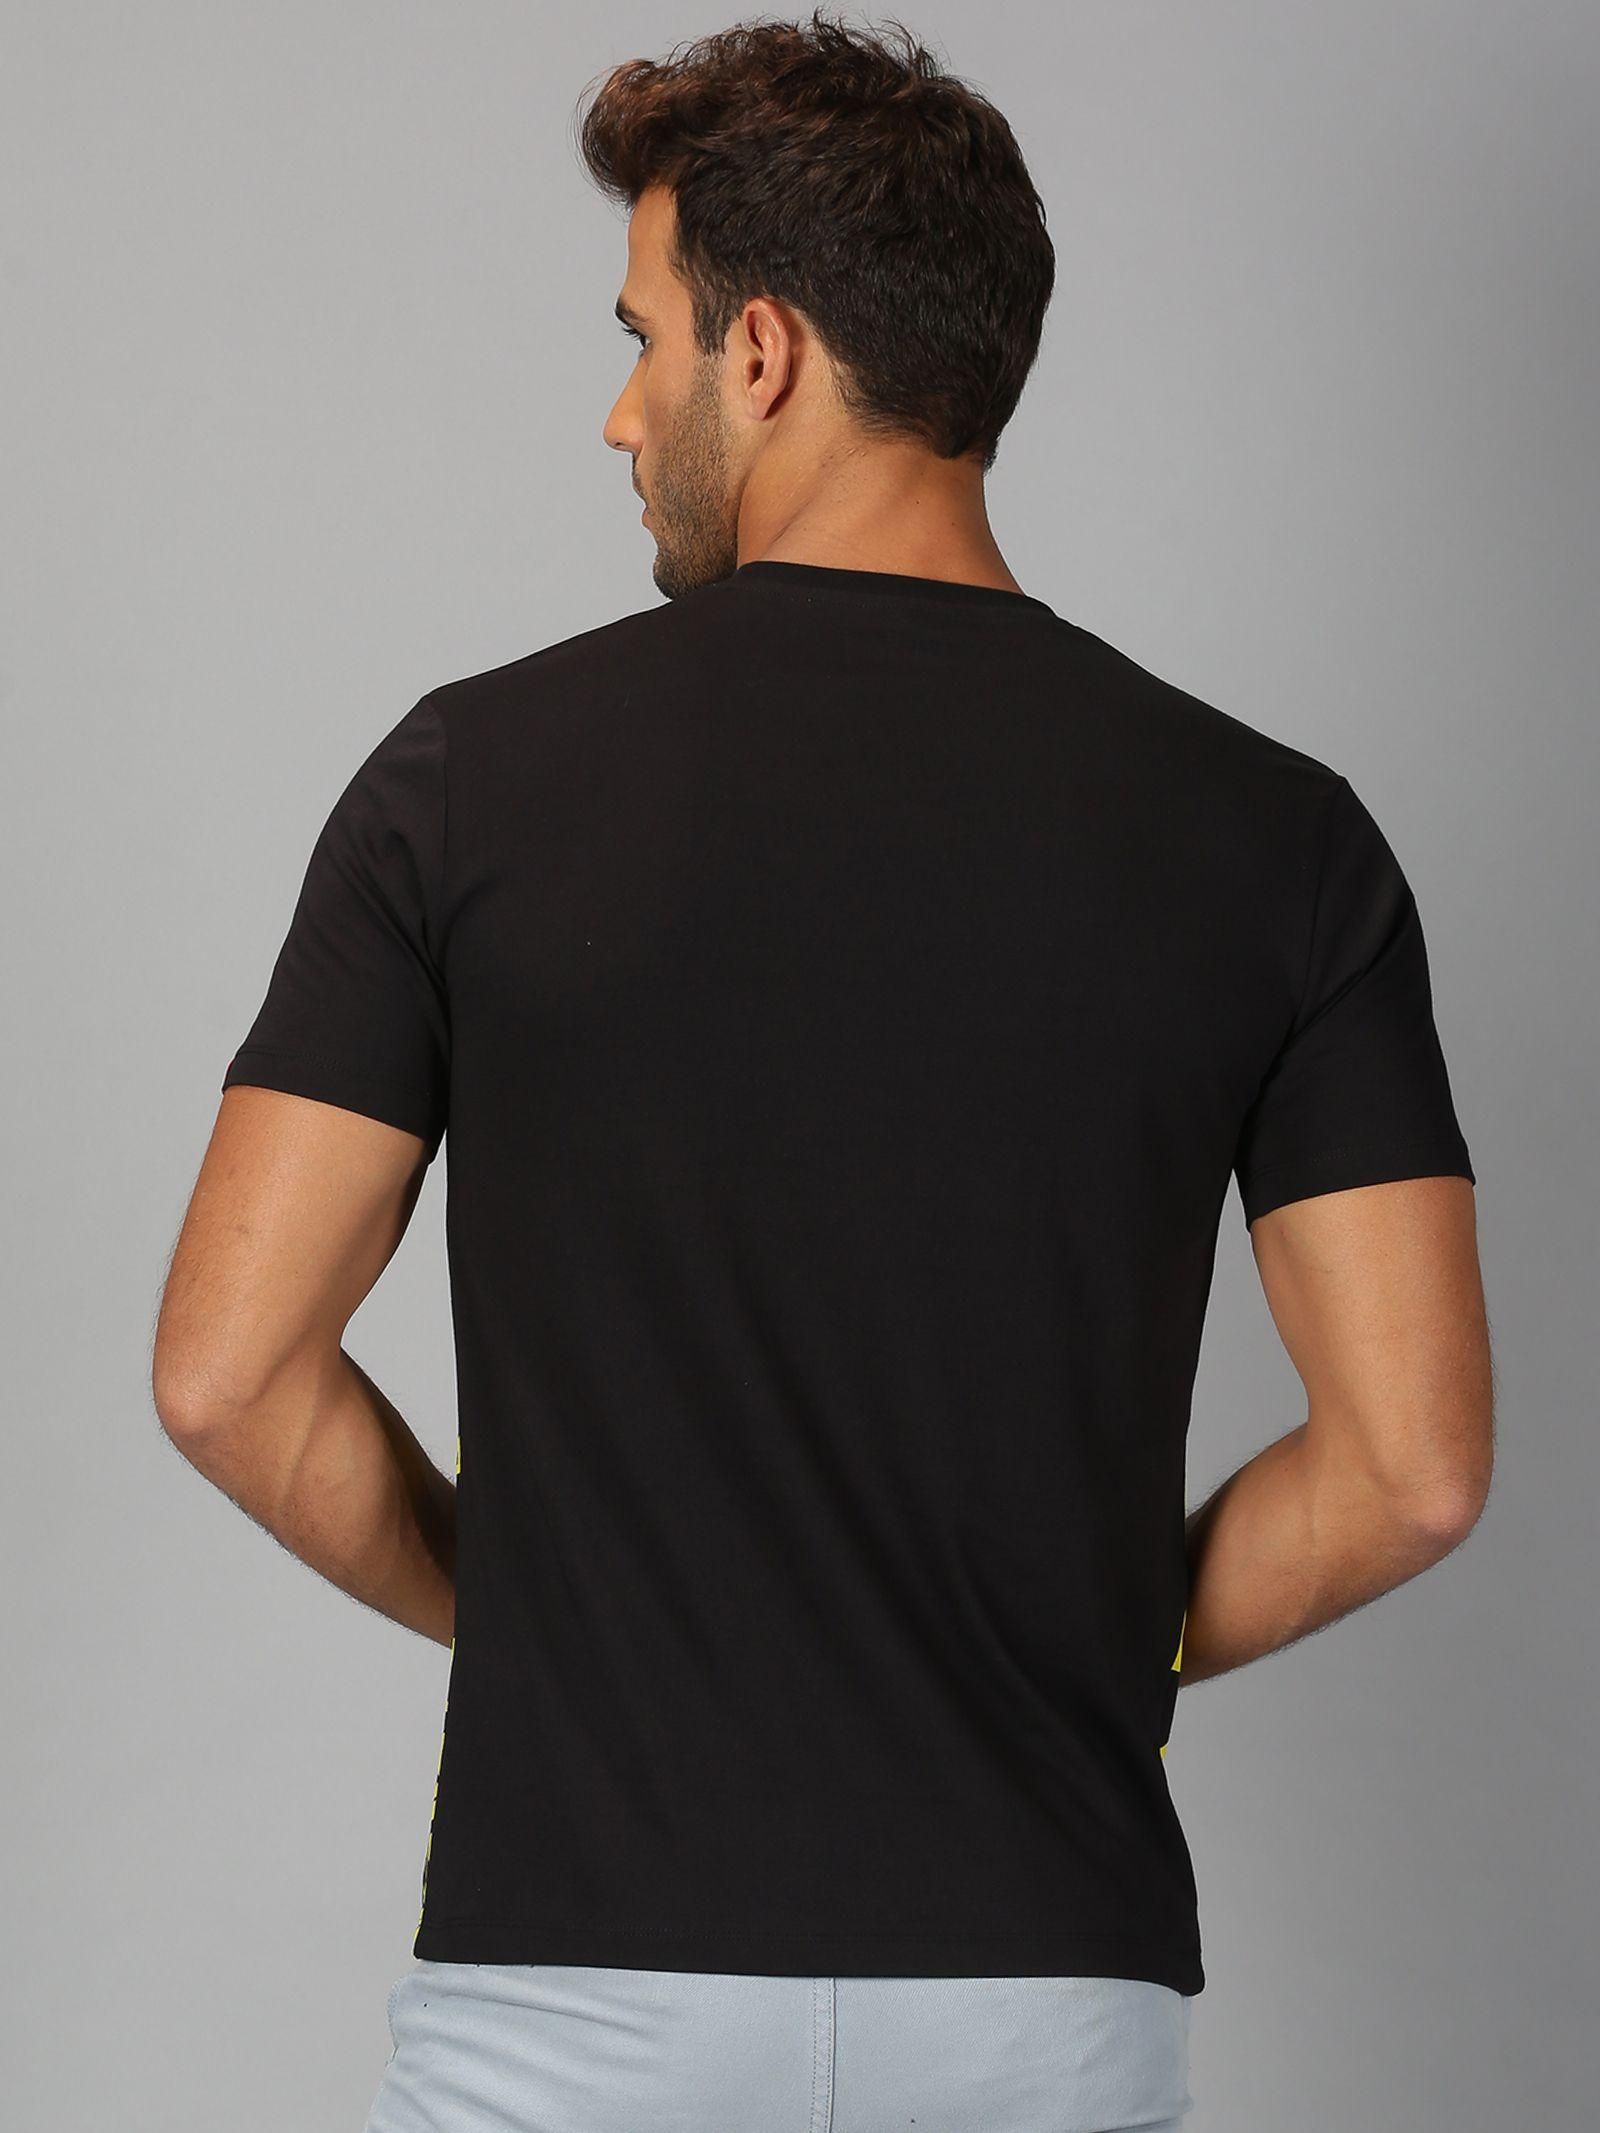 UrGear Cotton Printed Half Sleeves Round Neck Mens T-Shirt